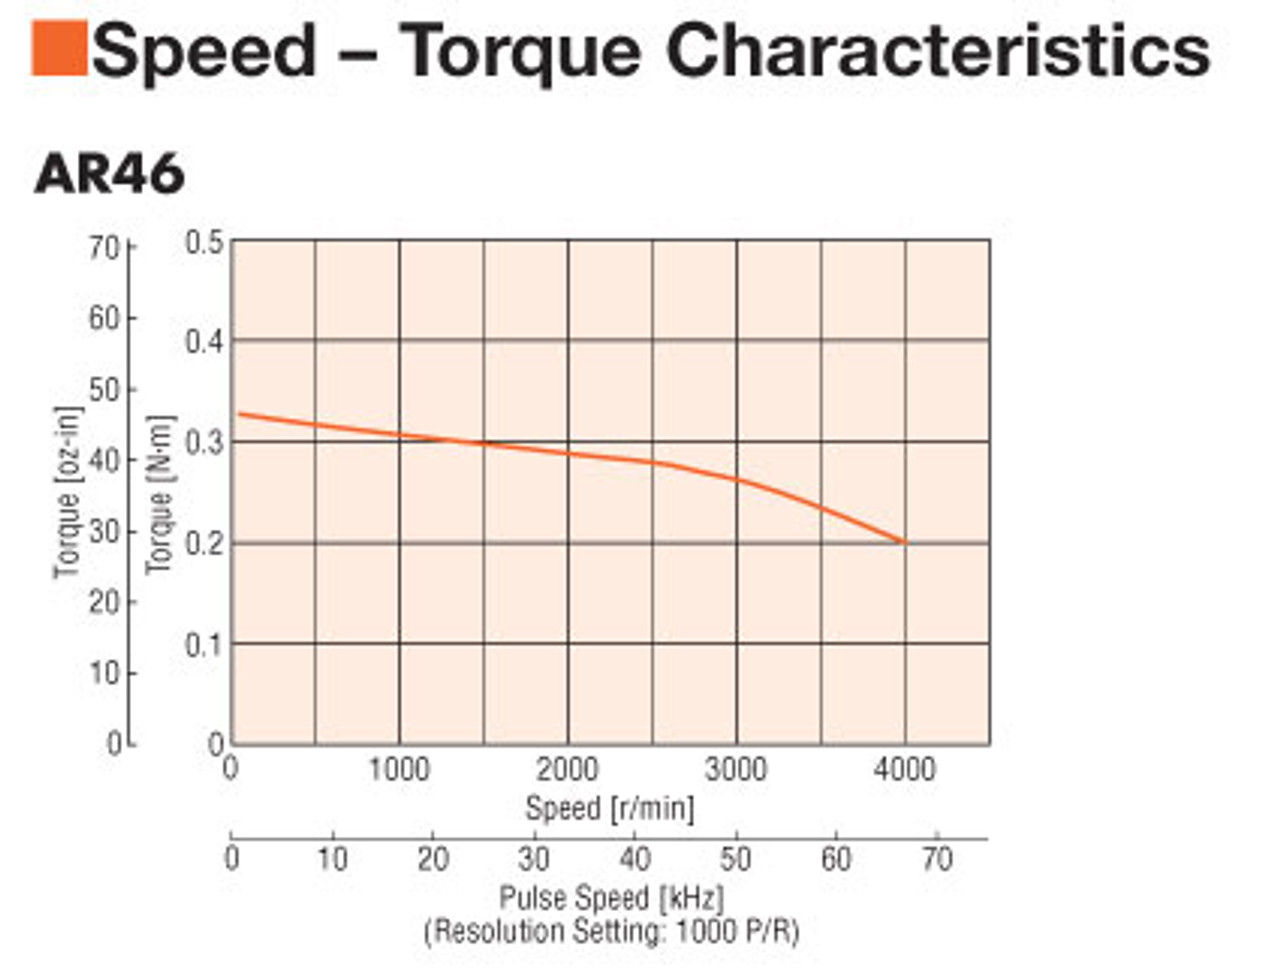 ARM46BC - Speed-Torque